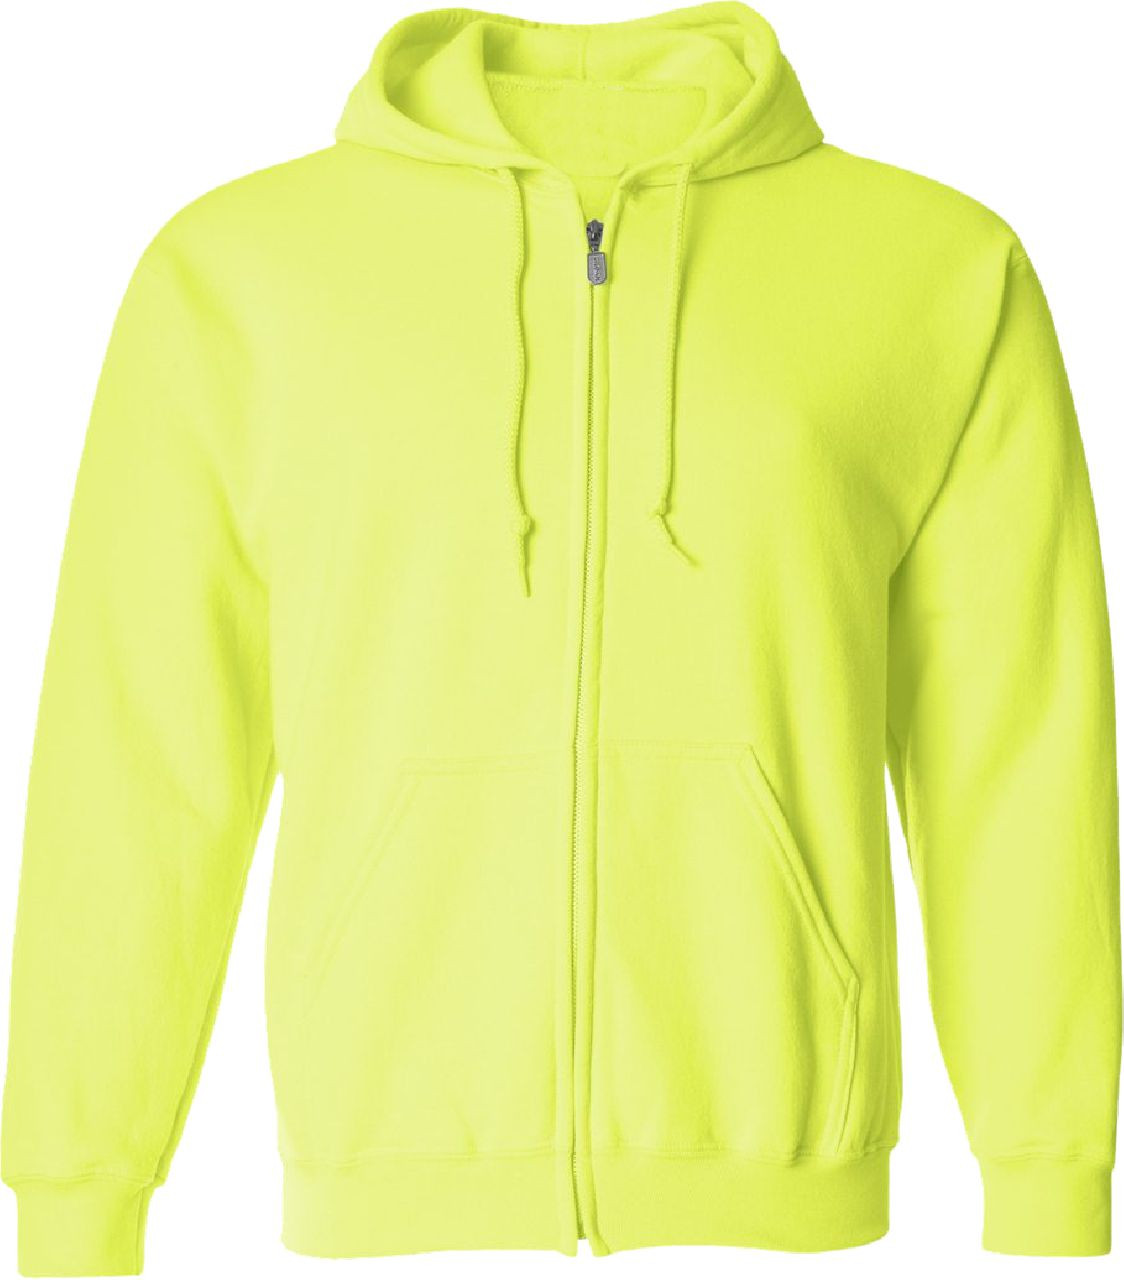 Safety Green Fleece Hooded Zip Up Sweatshirt *Custom Printing